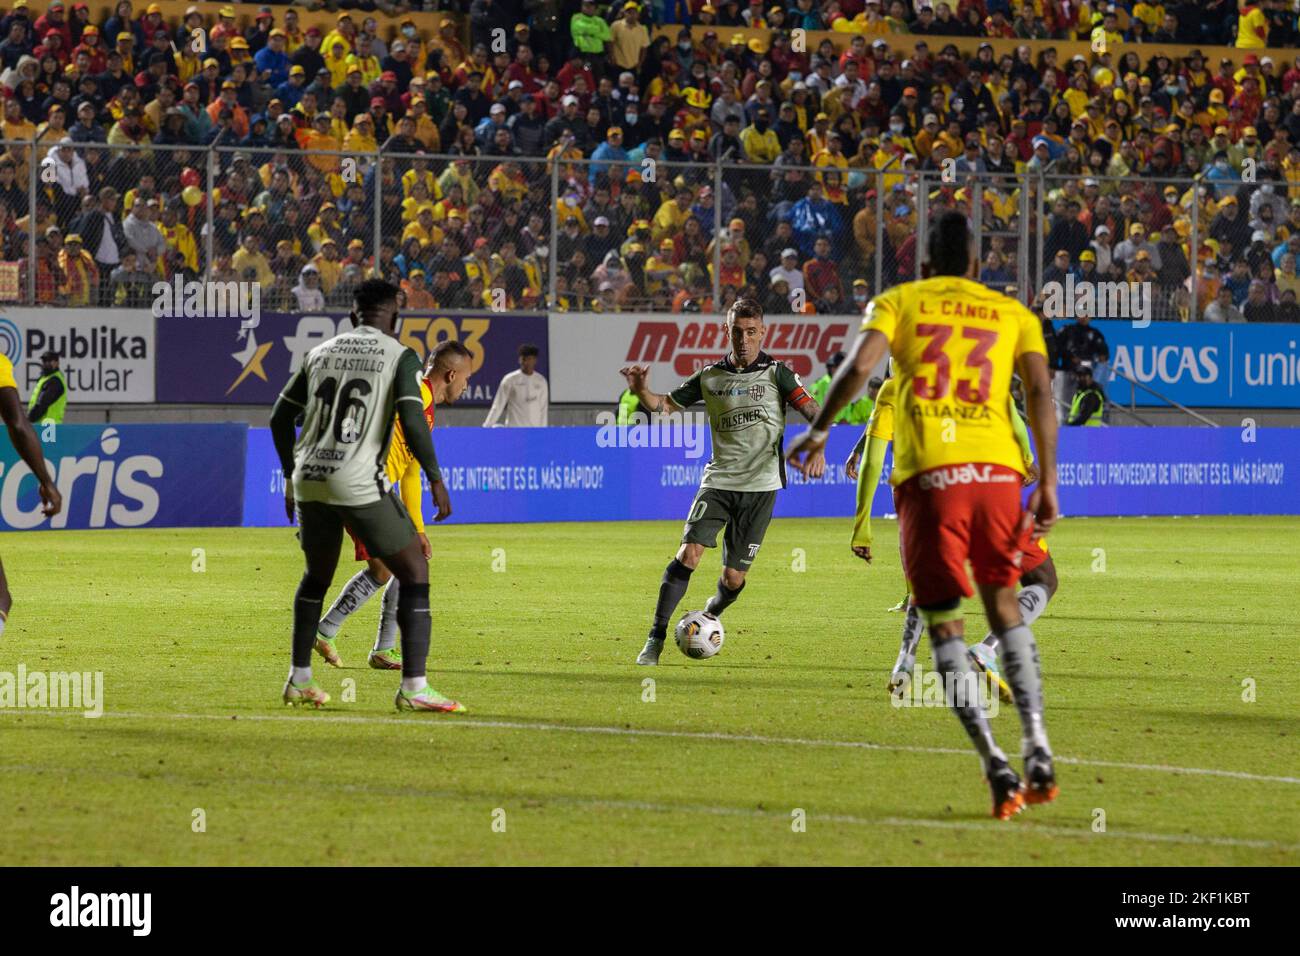 Quito, Ecuador - Ligapro Finale 2022 Aucas gegen Barcelona SC. Damian 'Kitu' Diaz dribbelt gegen Spieler von Aukas. Stockfoto